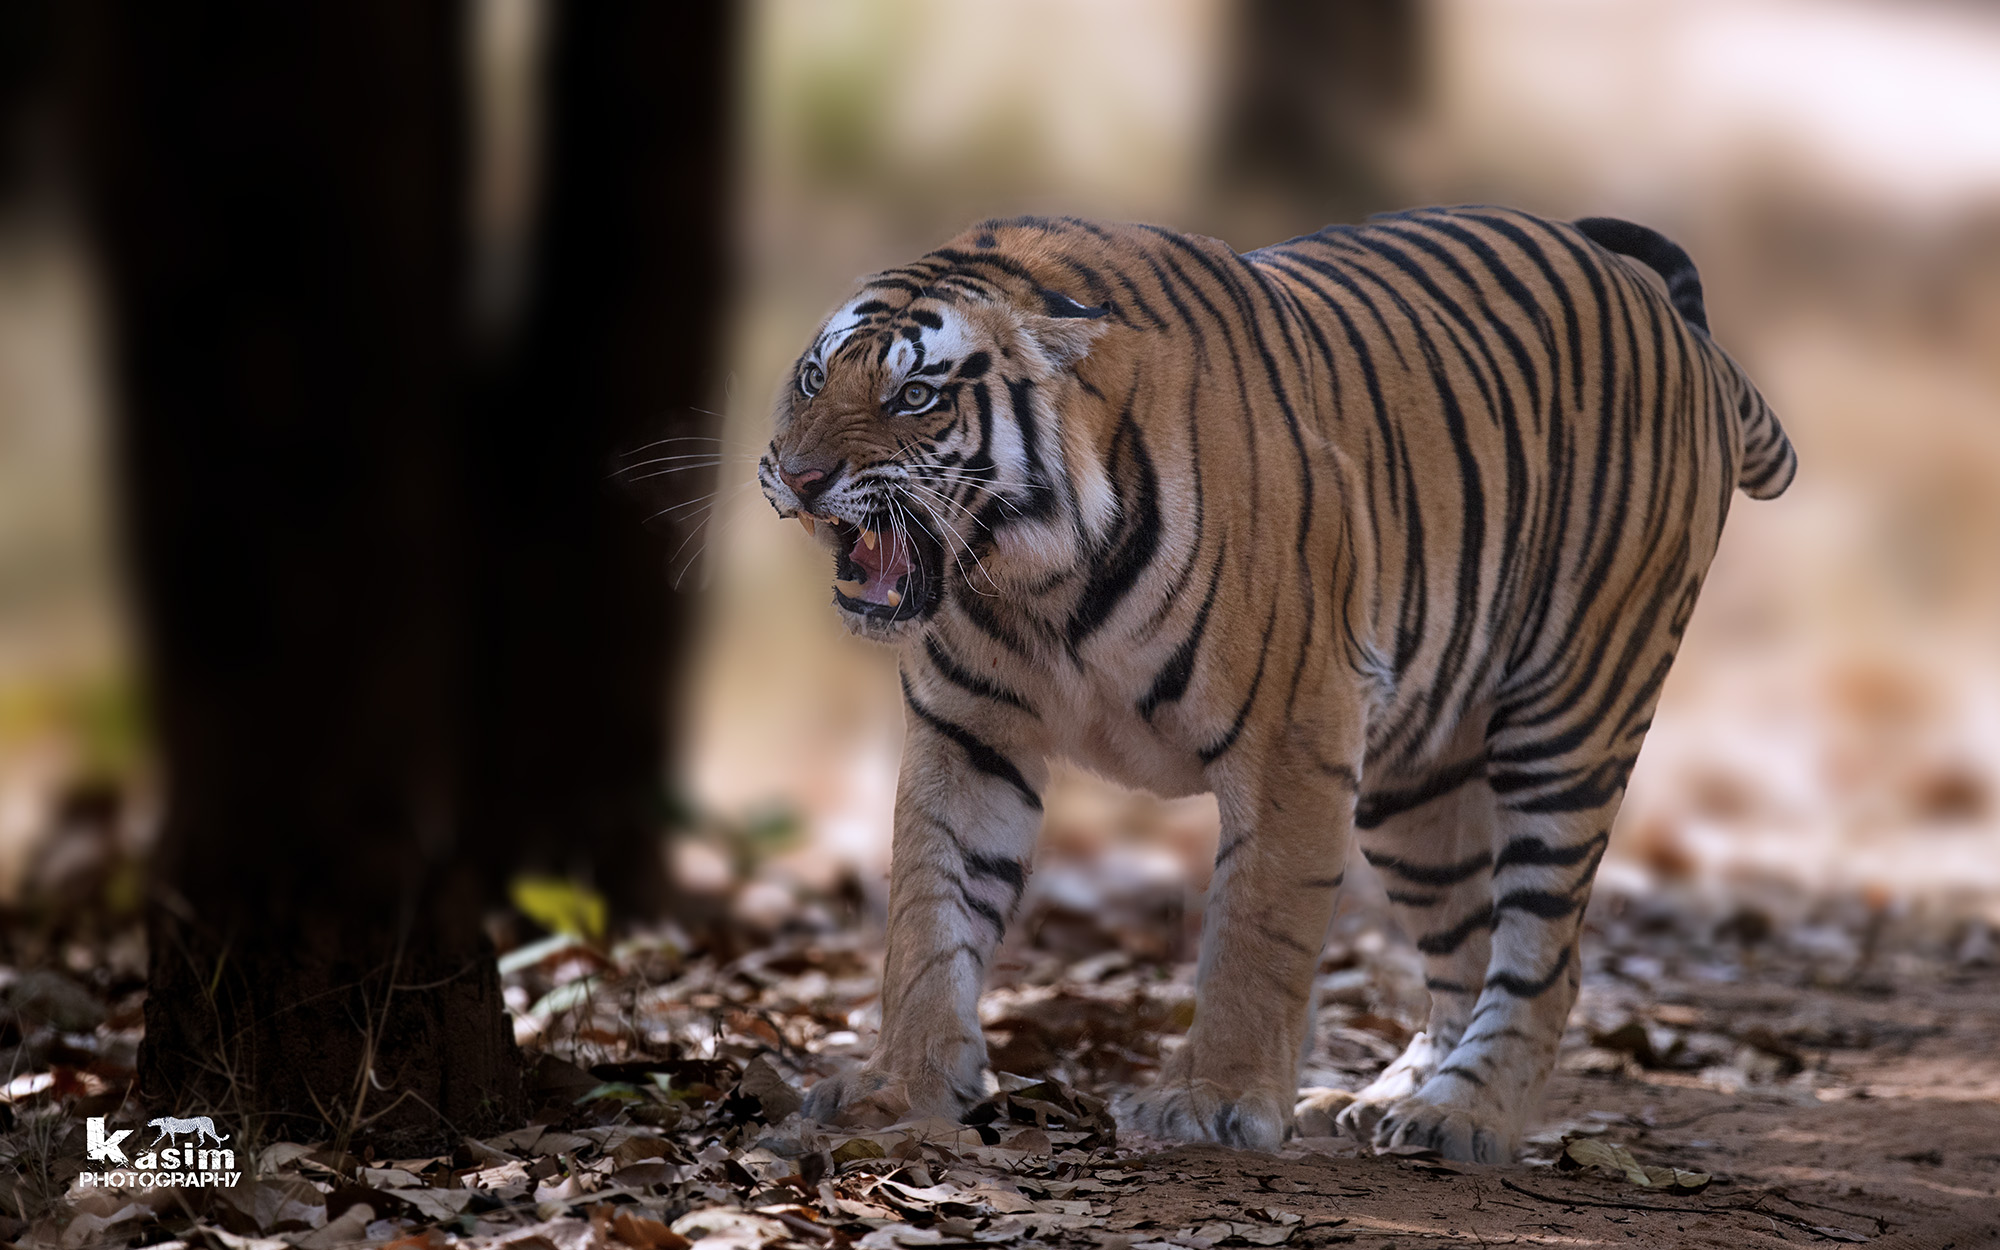 Tiger-Bandhavgarh Tiger Reserve ...